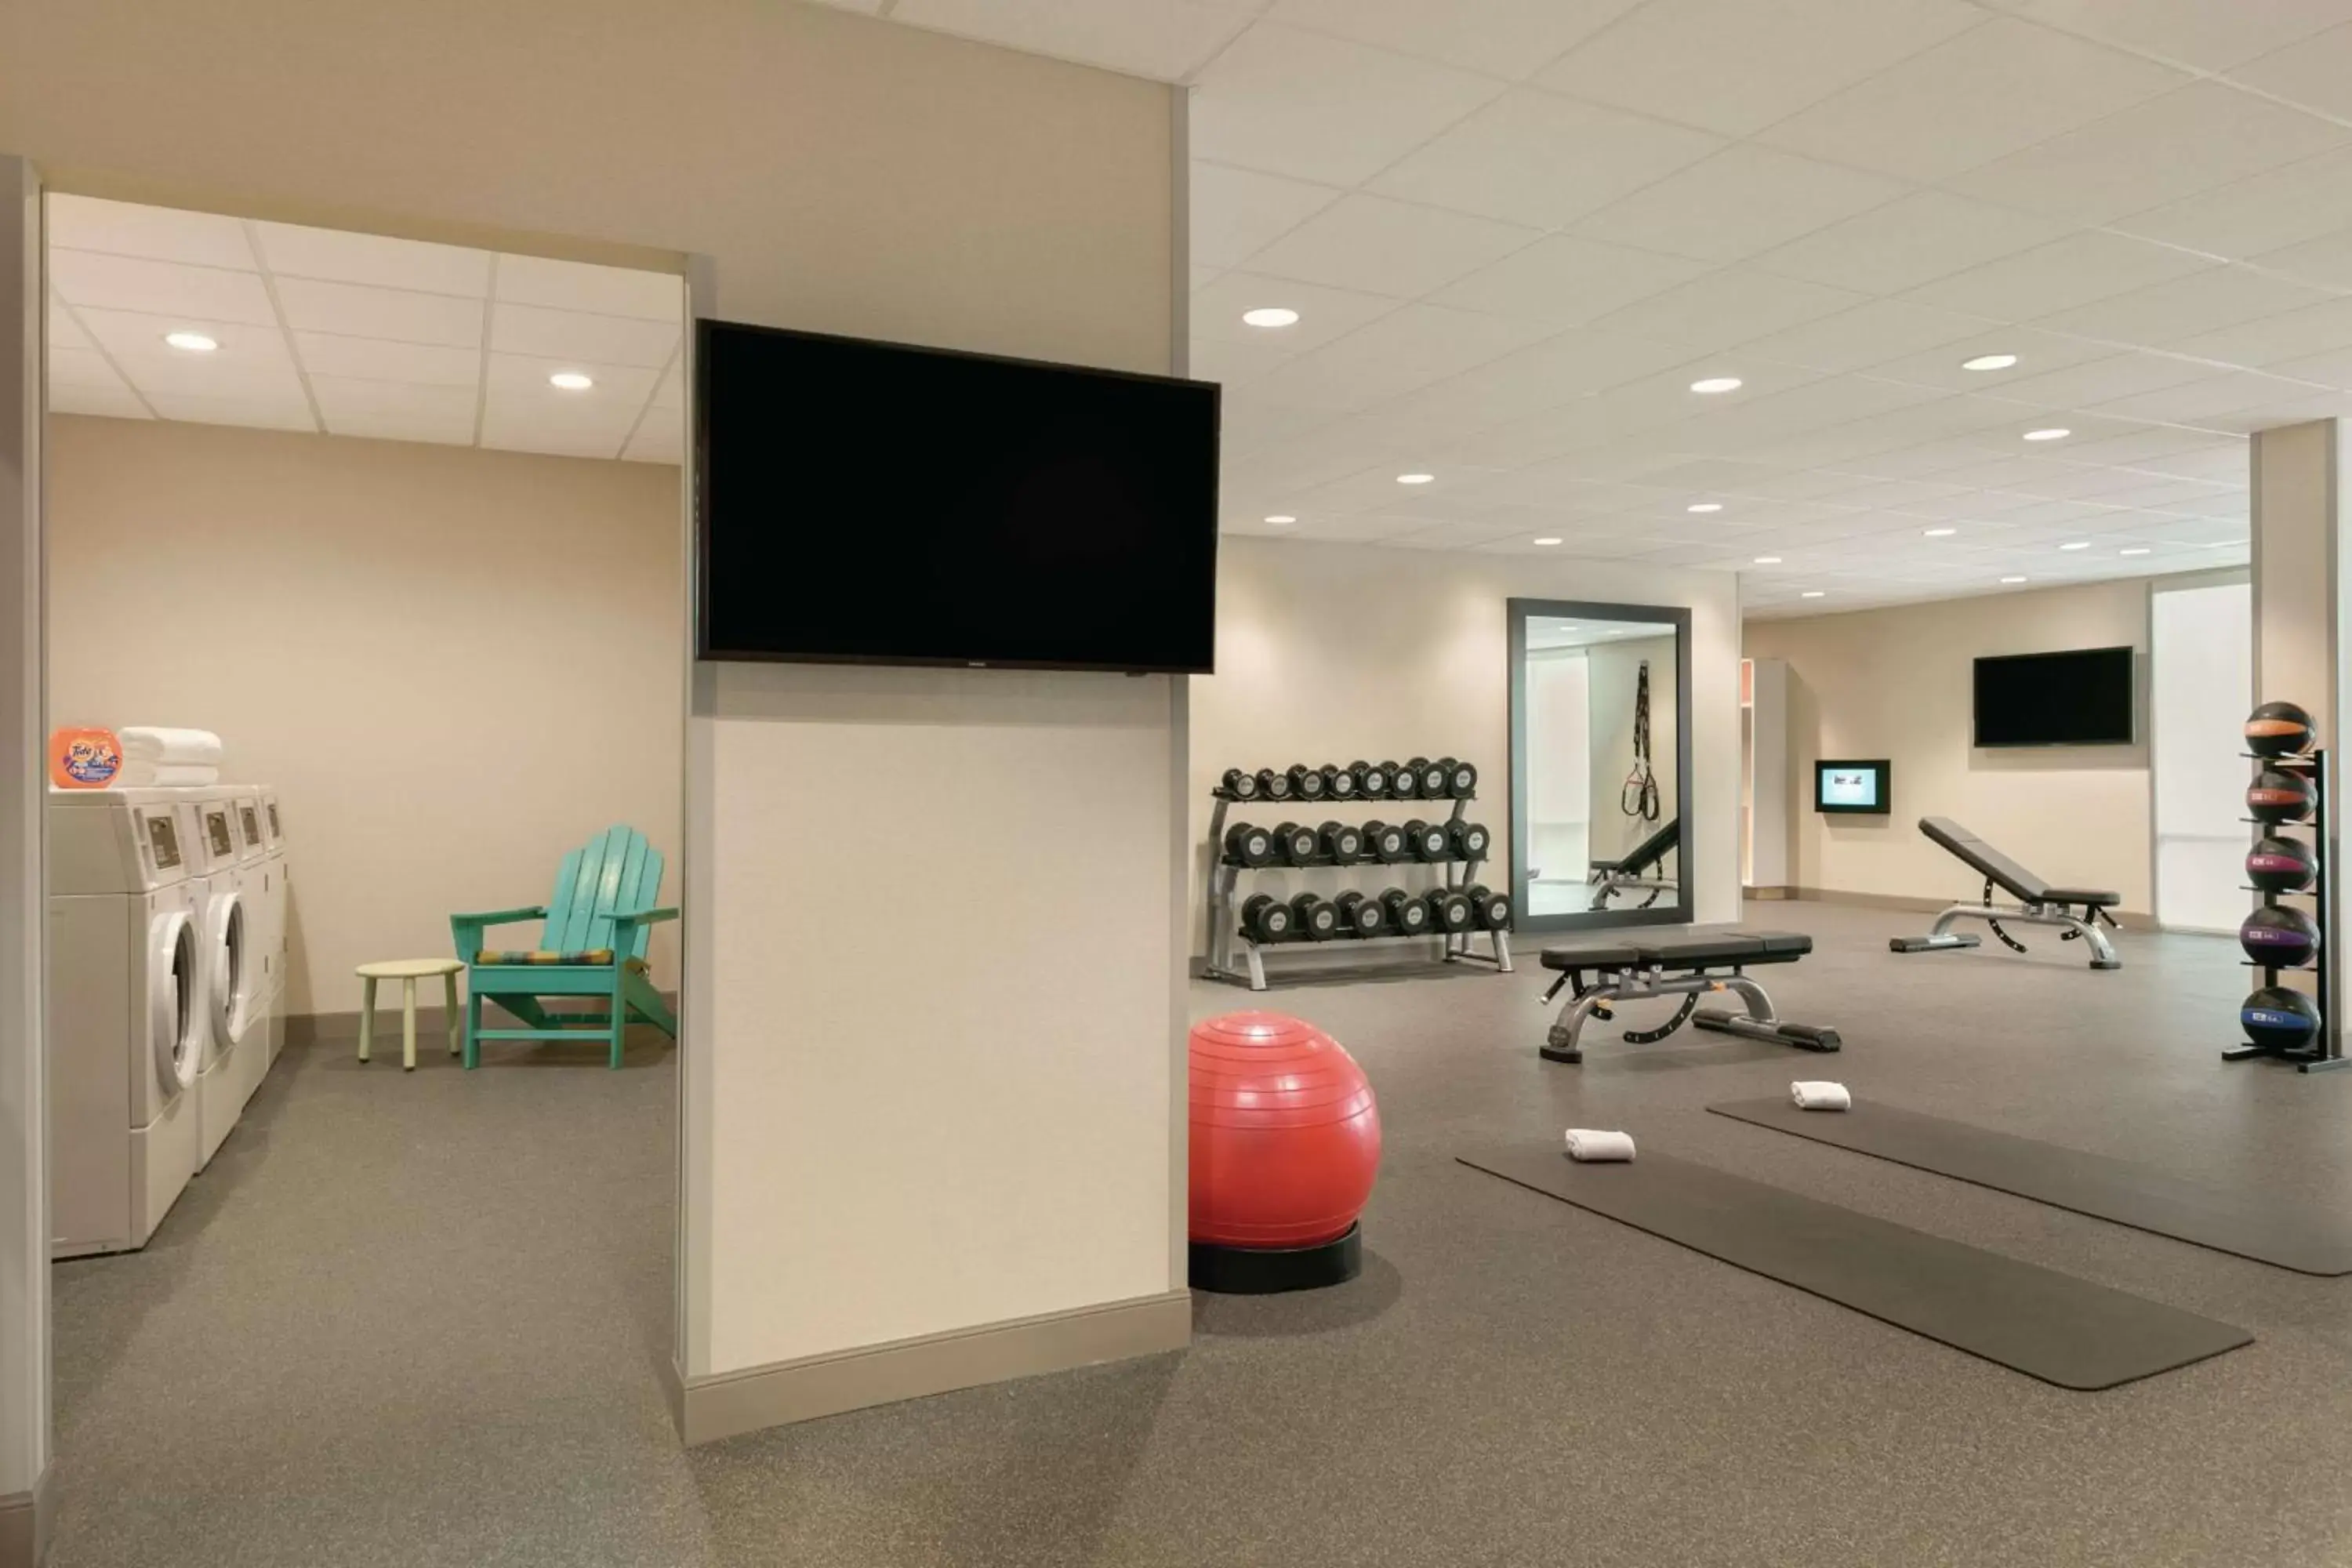 Fitness centre/facilities, Fitness Center/Facilities in Tru By Hilton Williamsville Buffalo Airport